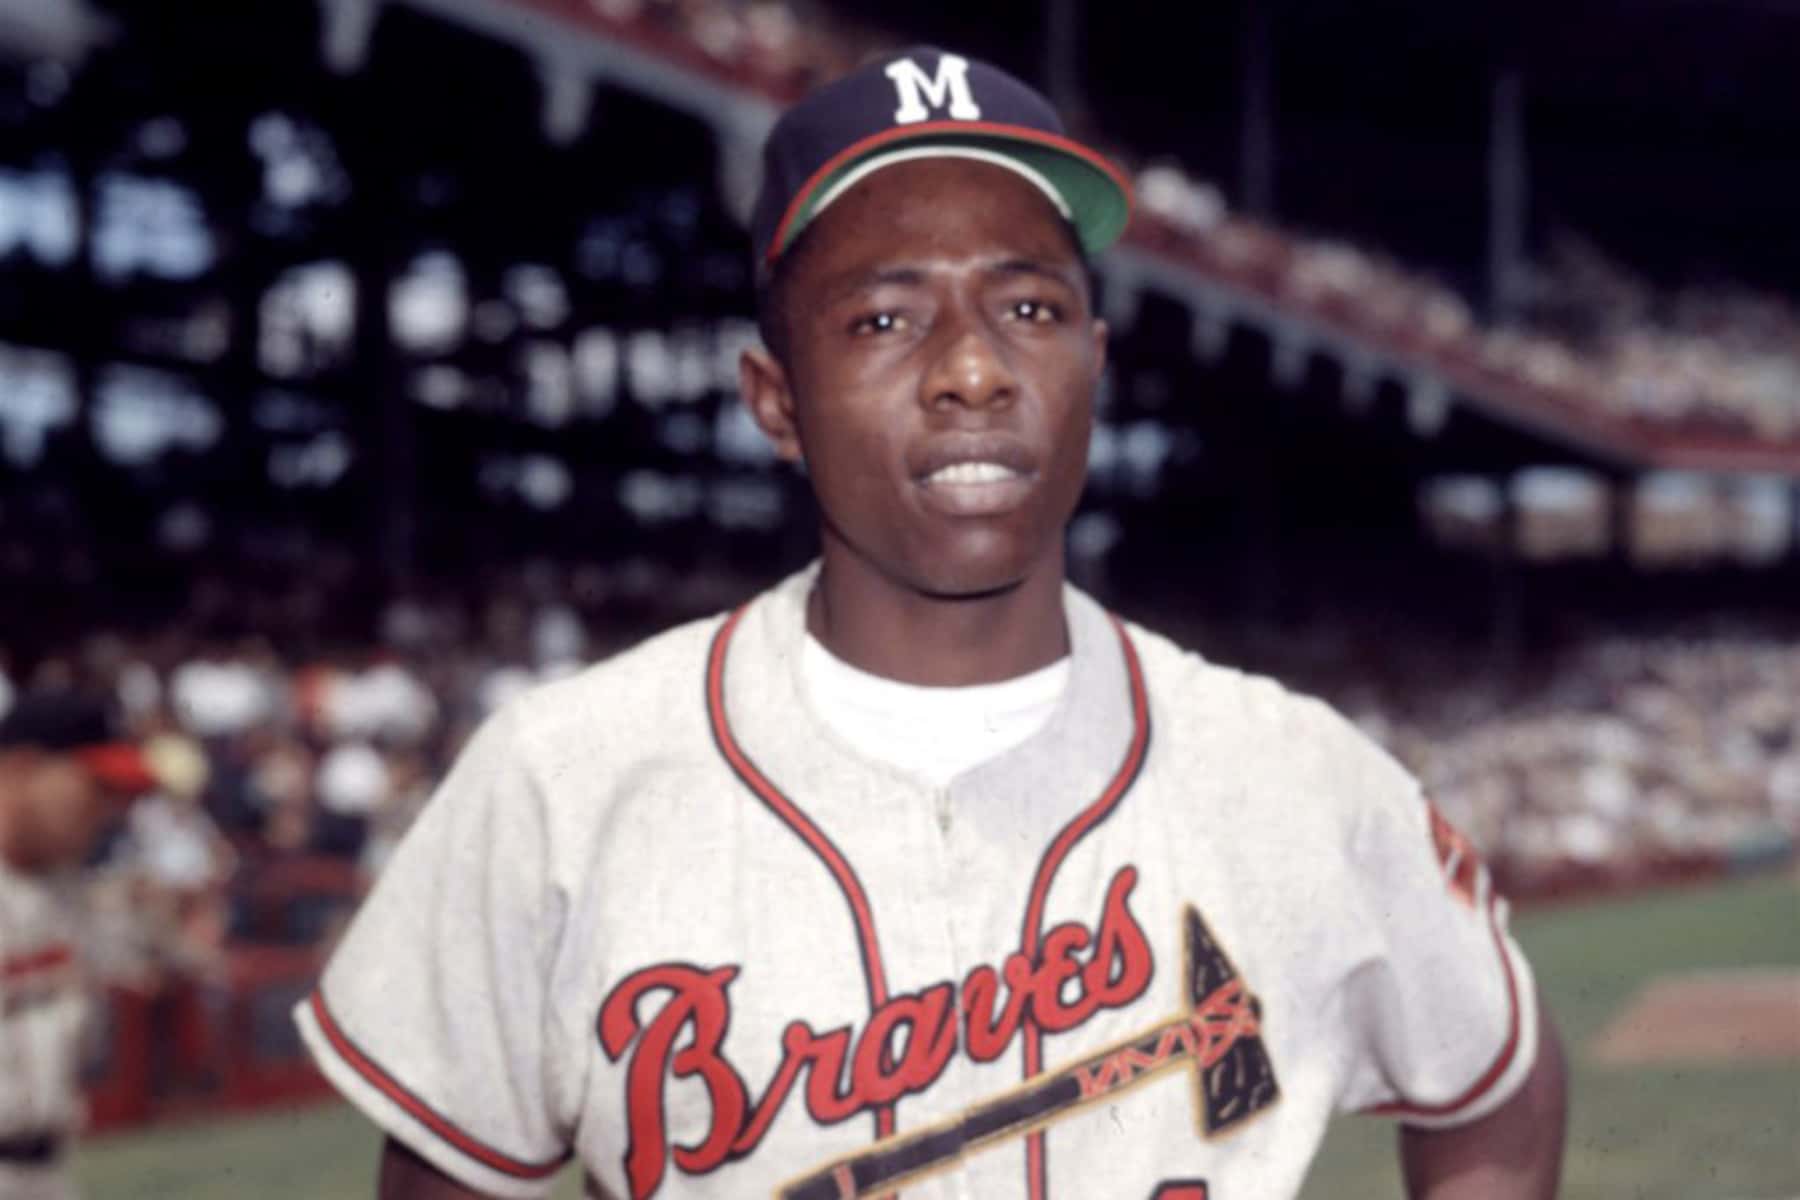 Longtime home run leader and former Milwaukee baseball player